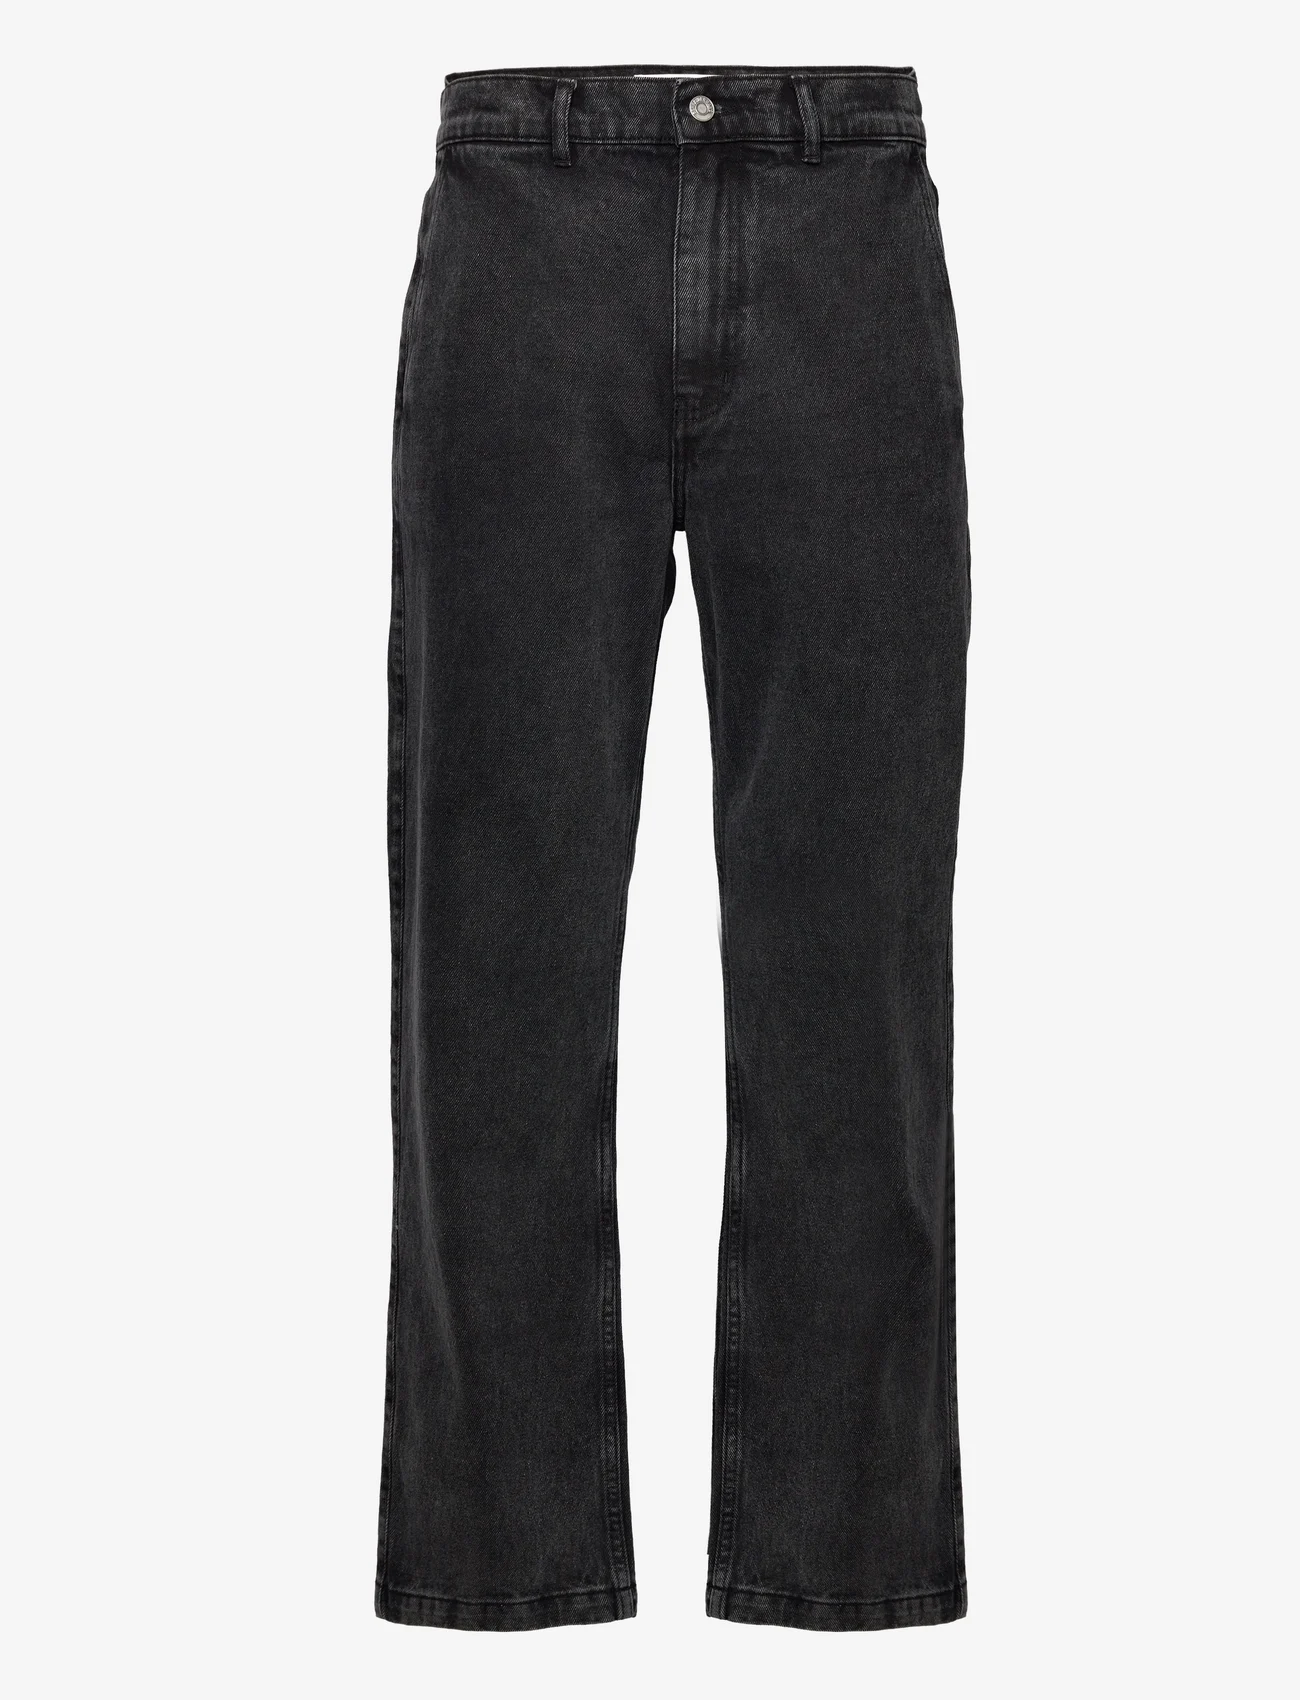 Schnayderman's - TROUSERS ALEF DENIM - brīva piegriezuma džinsa bikses - faded black - 0